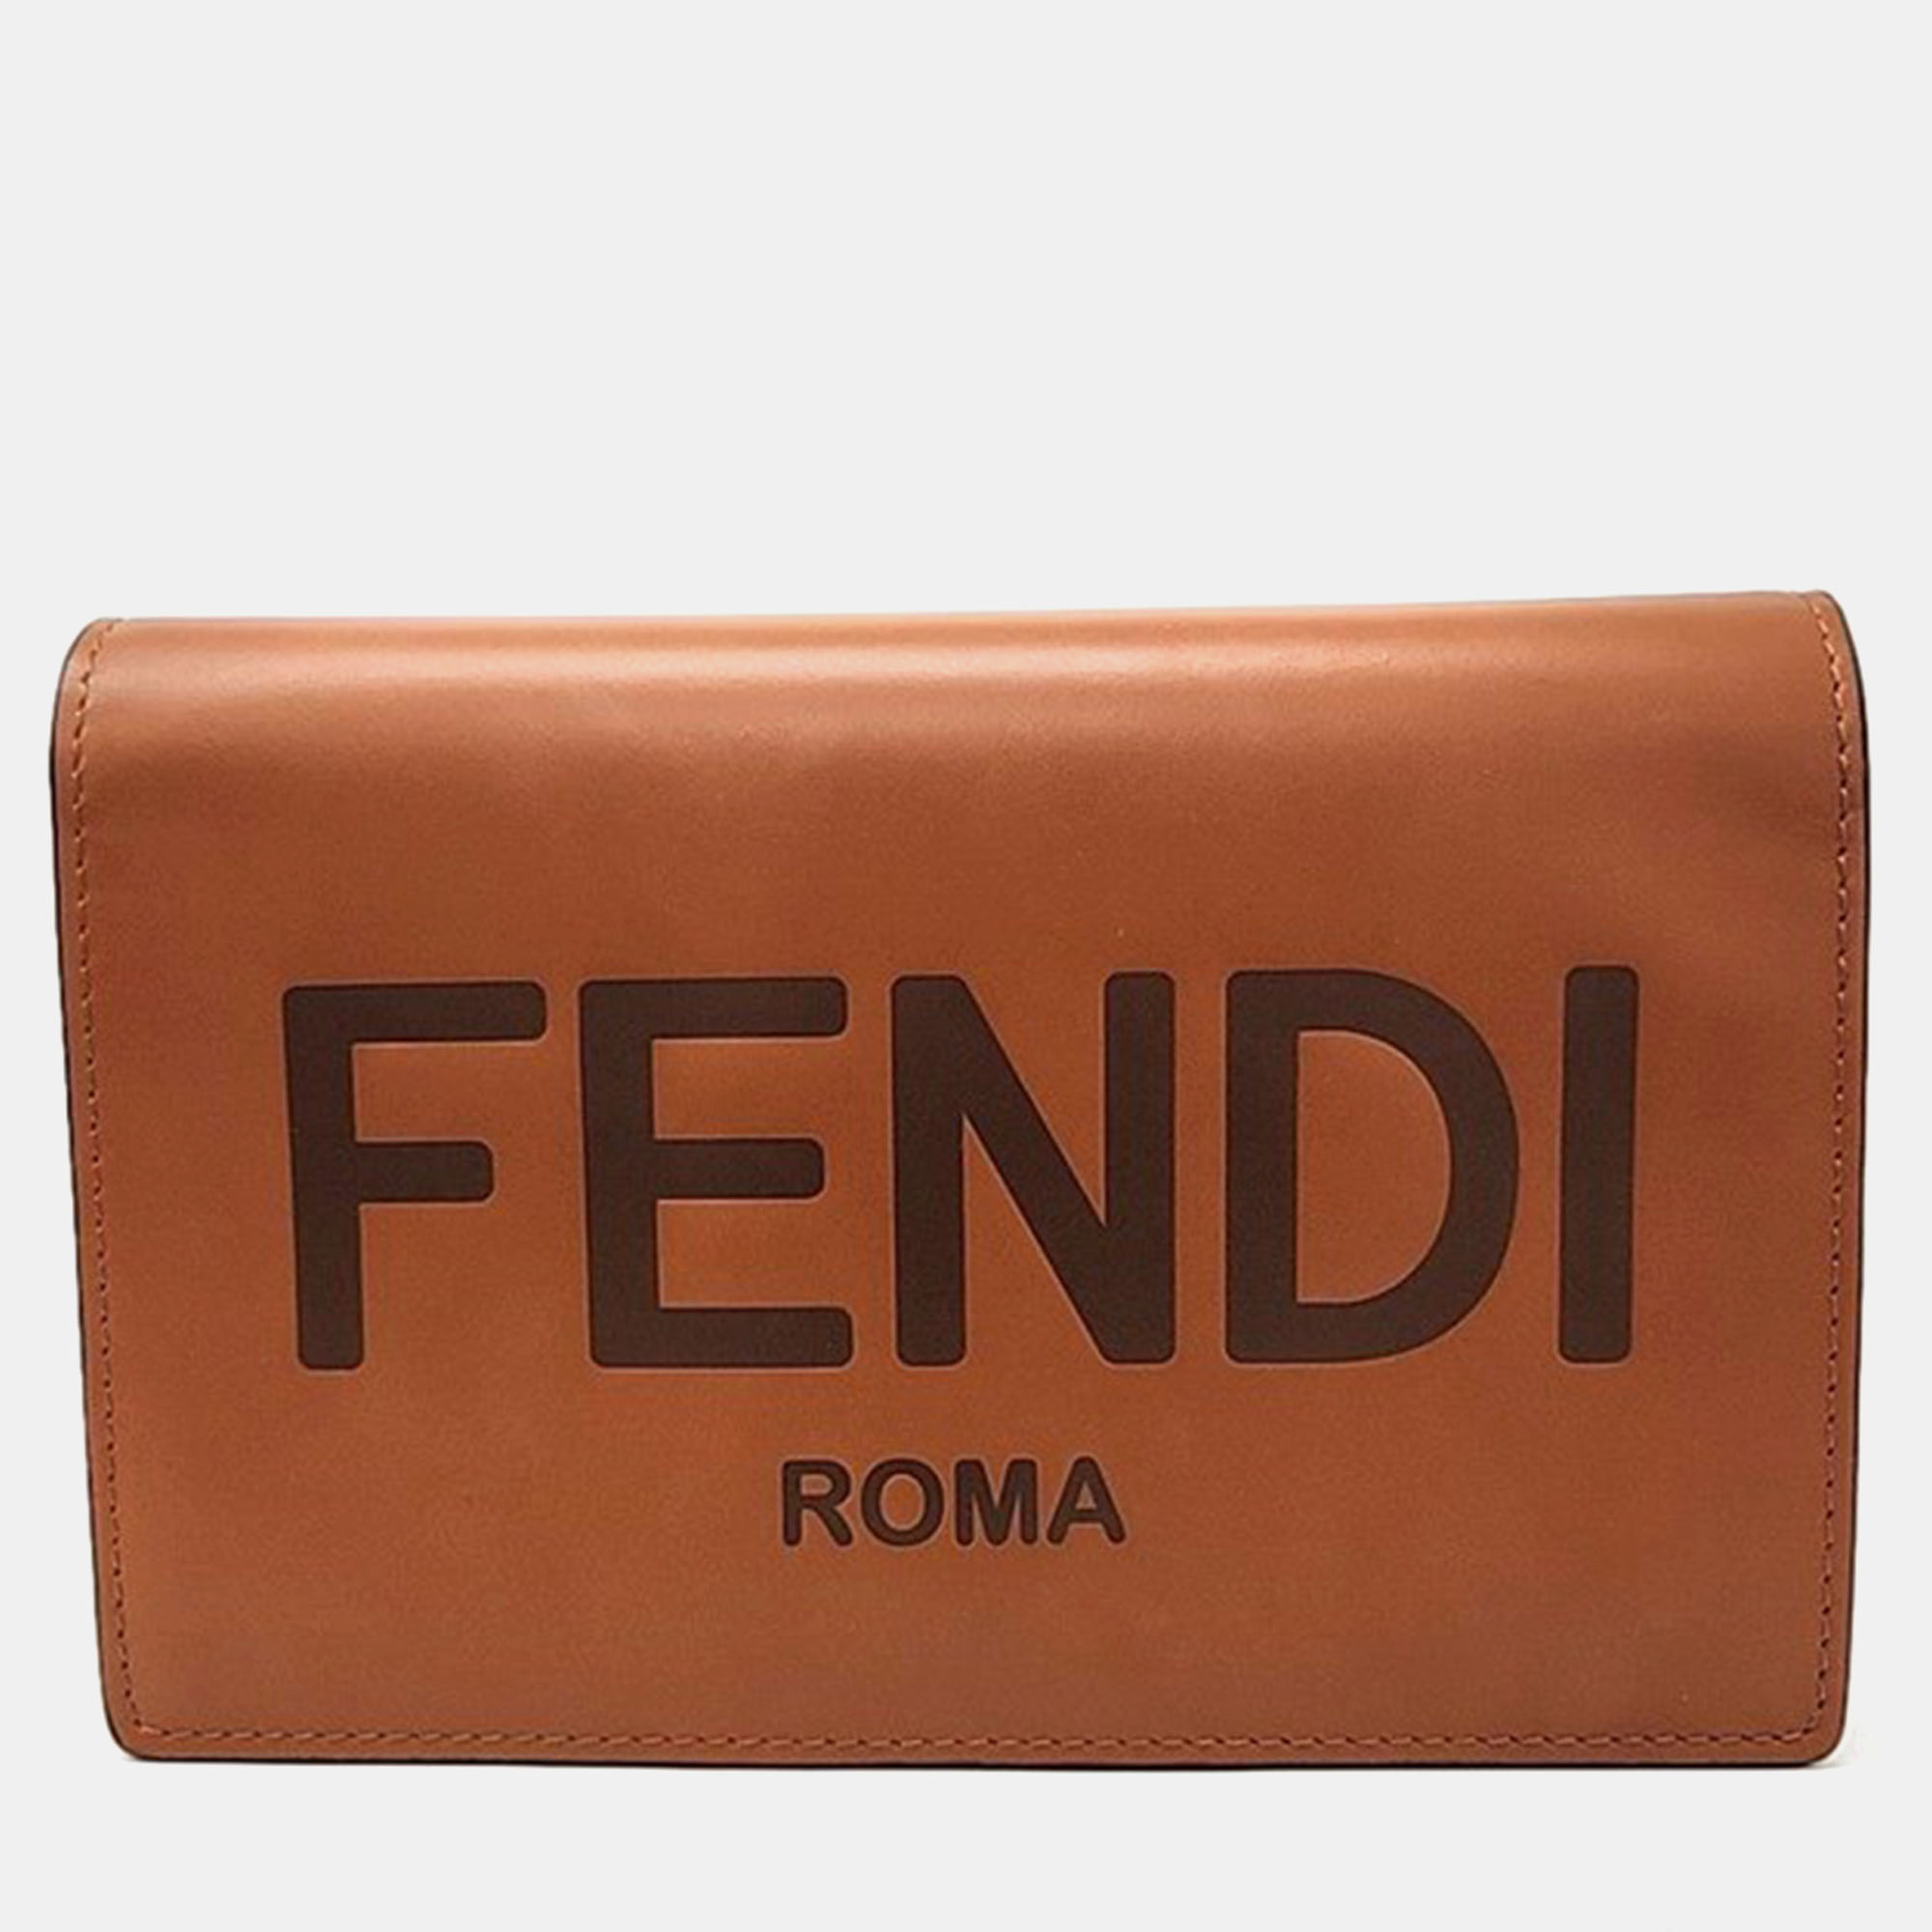 Fendi brown leather logo chain wallet